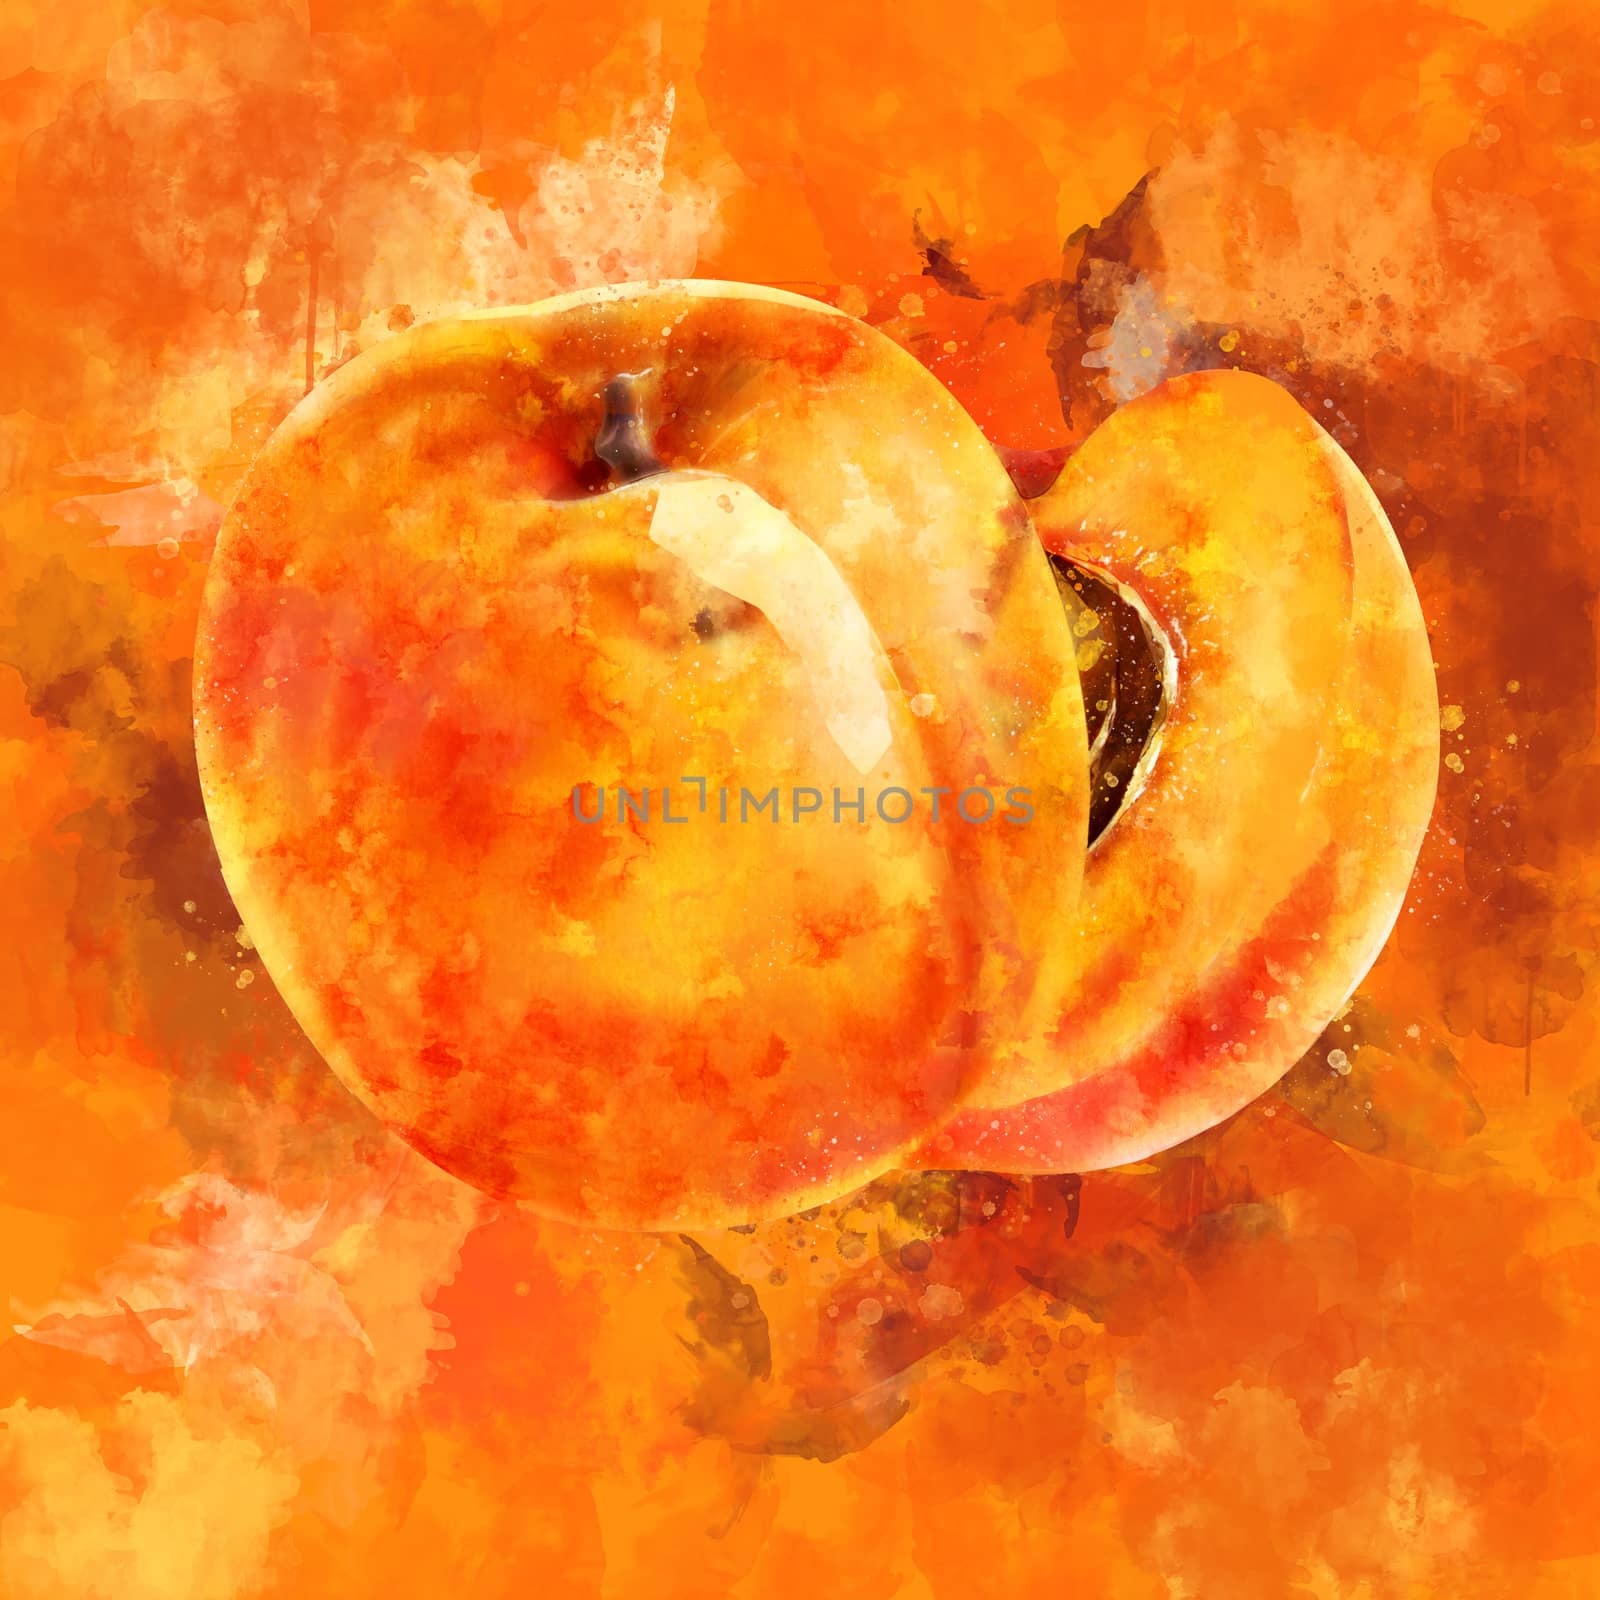 Apricot, hand-painted illustration on orange background